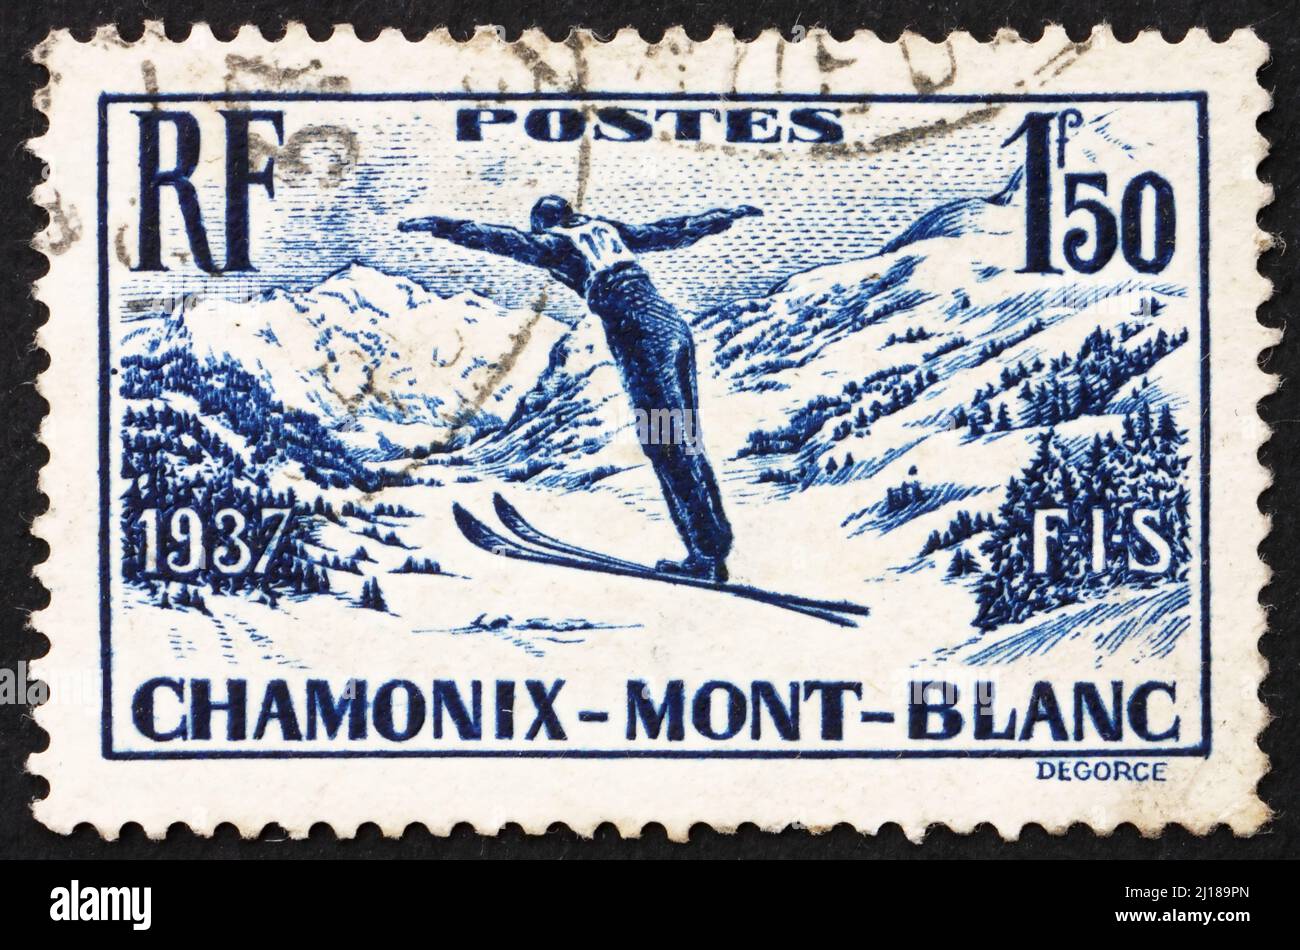 FRANCIA - ALREDEDOR de 1937: Un sello impreso en el France Shows Ski Jumper, International Ski Meet en Chamonix, Mont Blanc, alrededor de 1937 Foto de stock